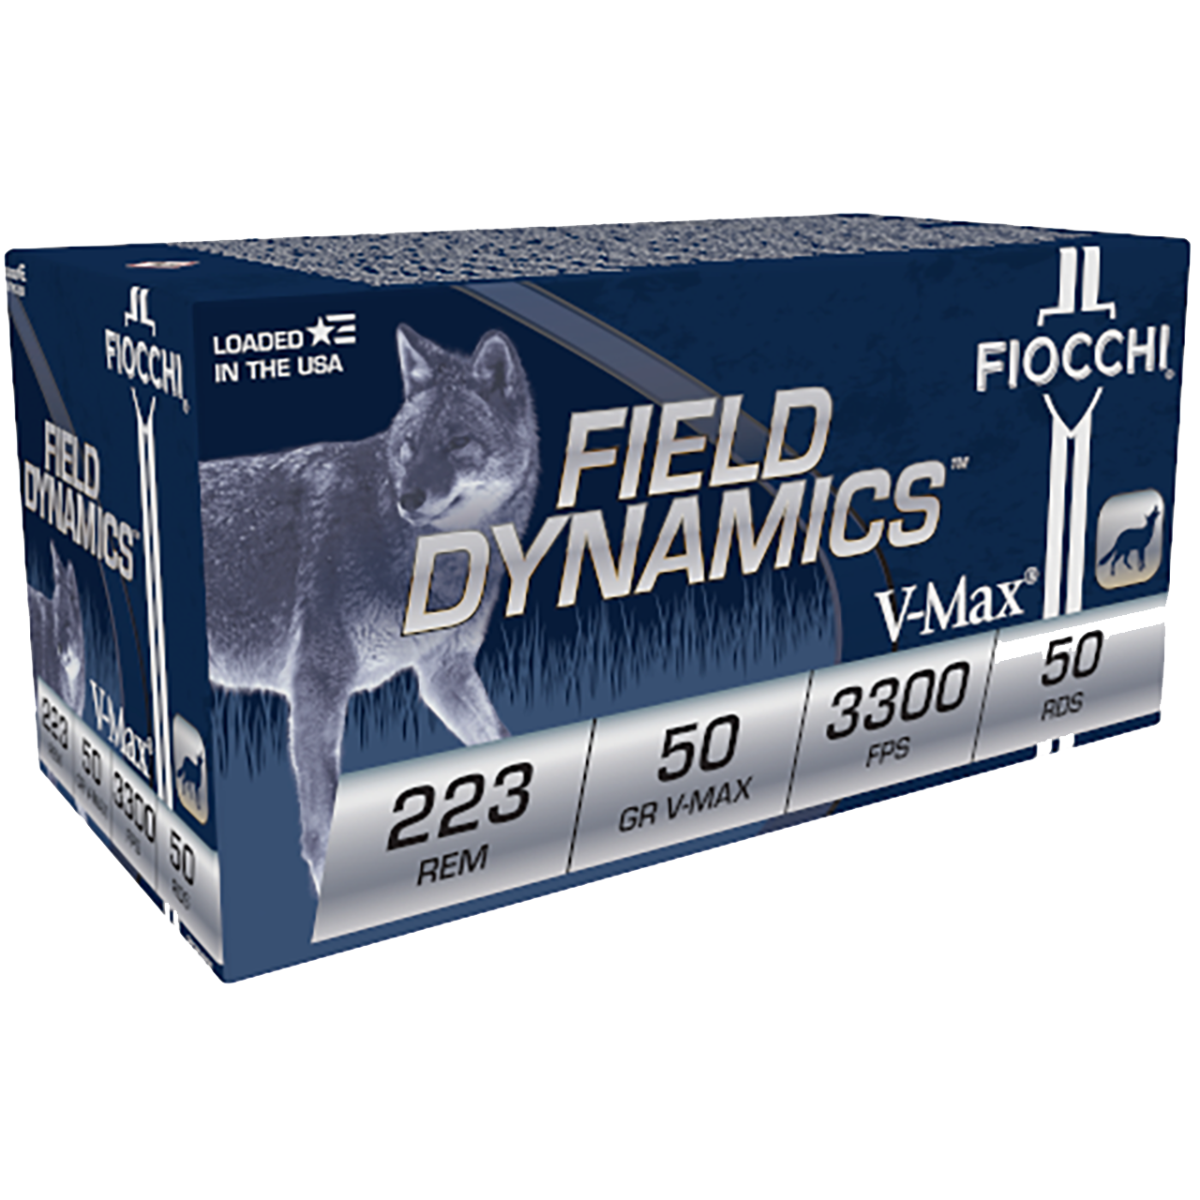 Fiocchi Field Dynamics V-Max Polymer Tip Ammo